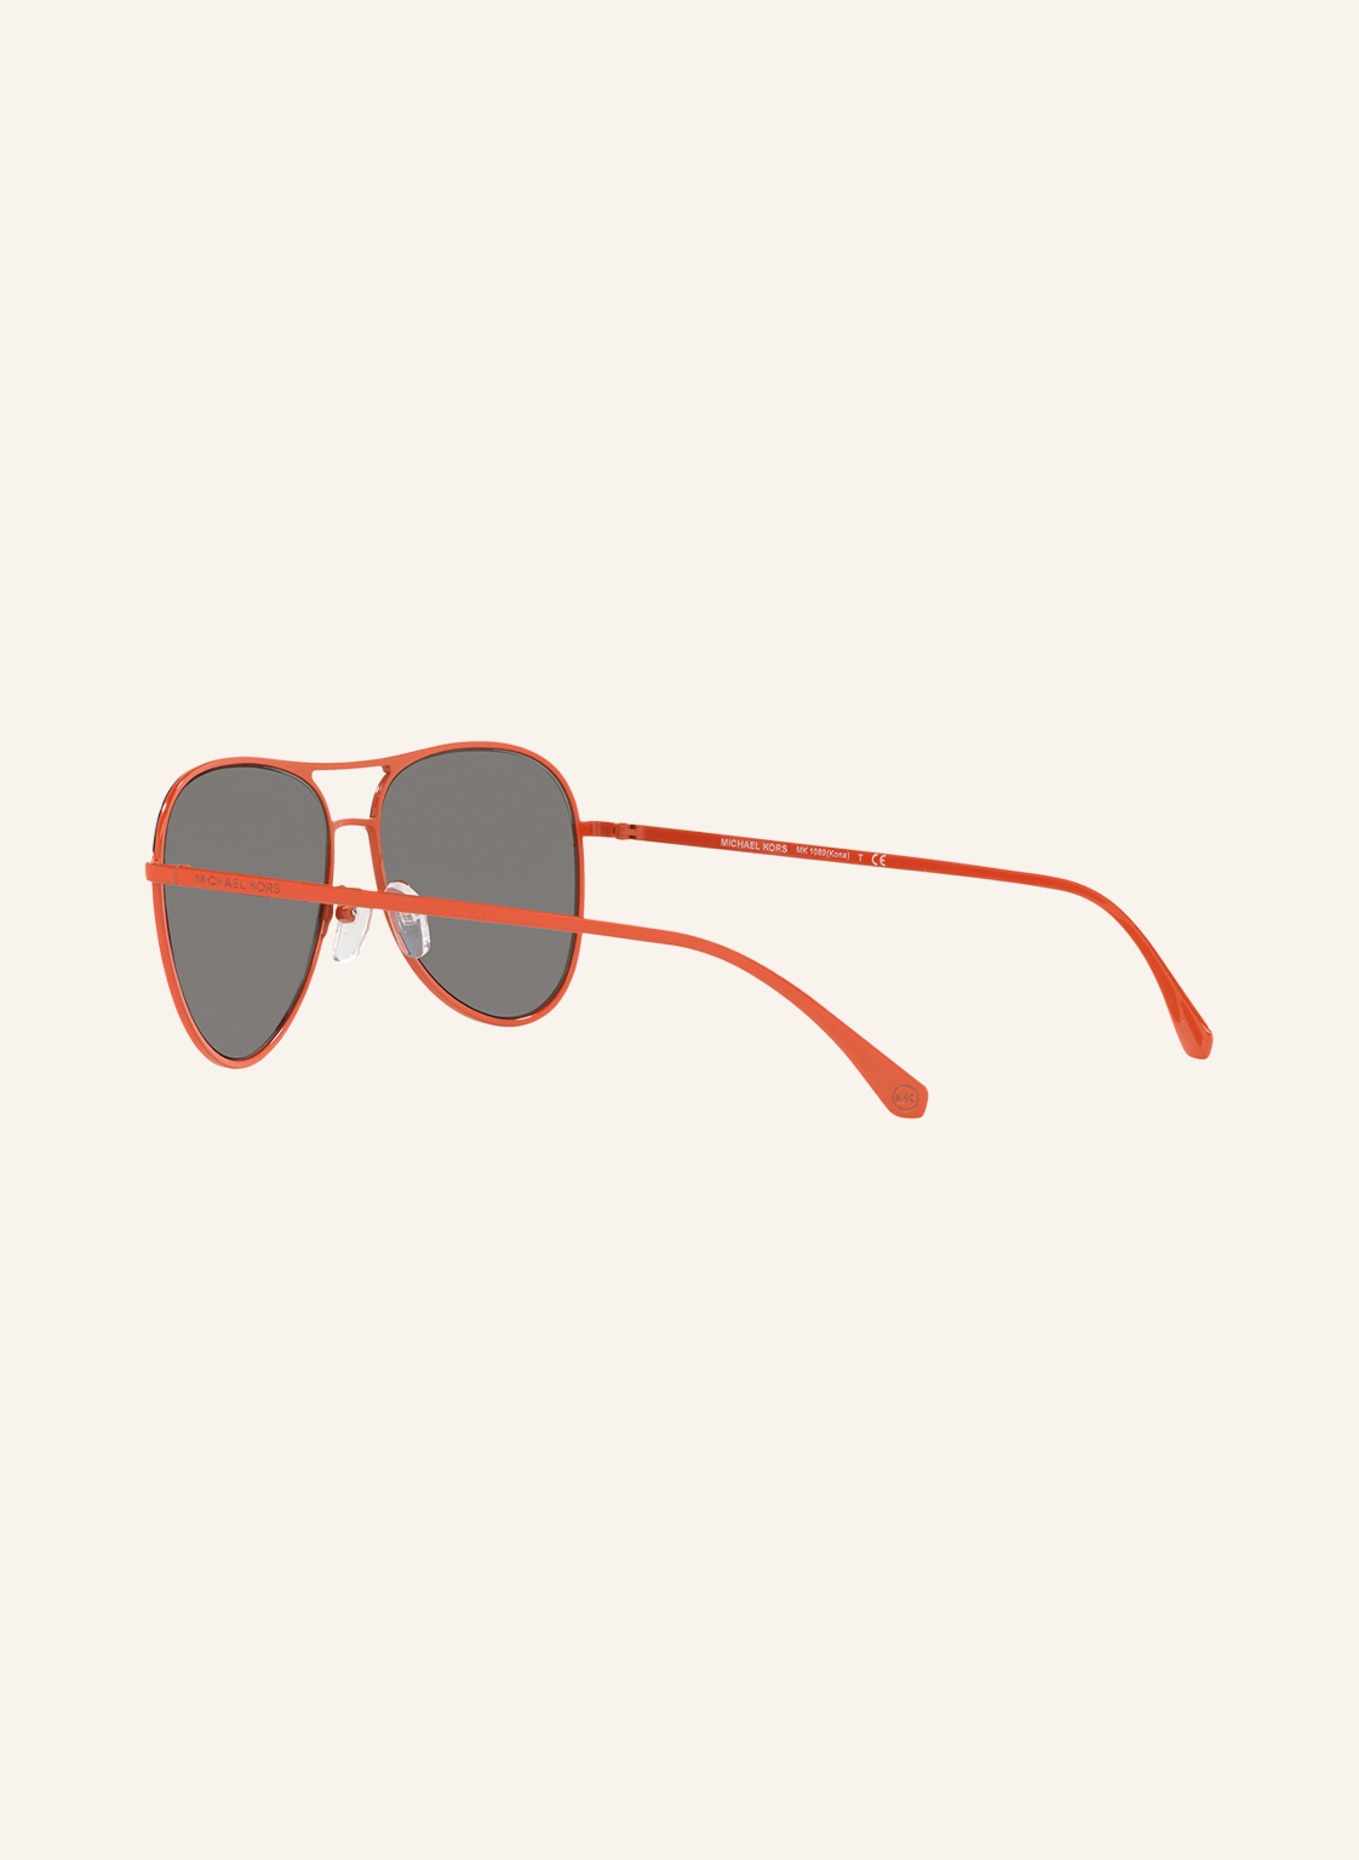 MICHAEL KORS Sunglasses MK1089 in 12586g  orange black